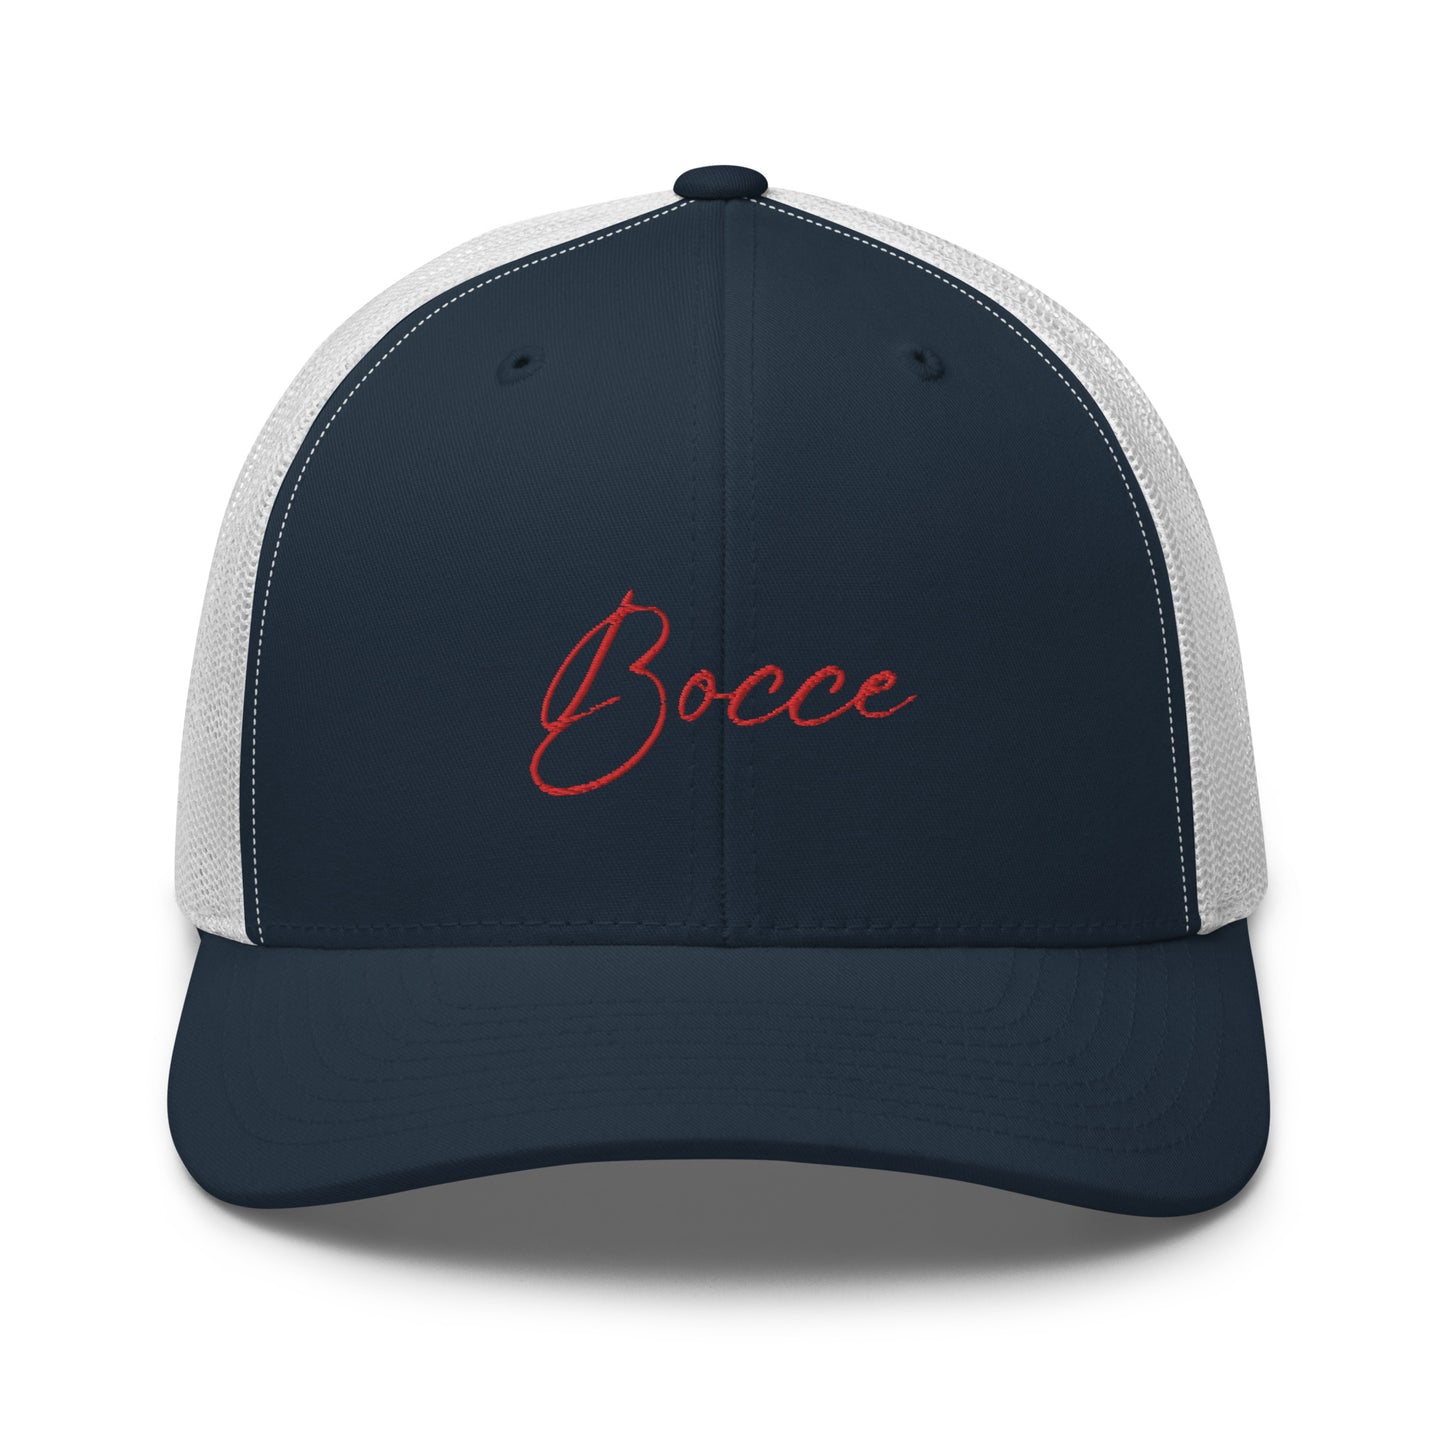 Bocce Trucker Hat